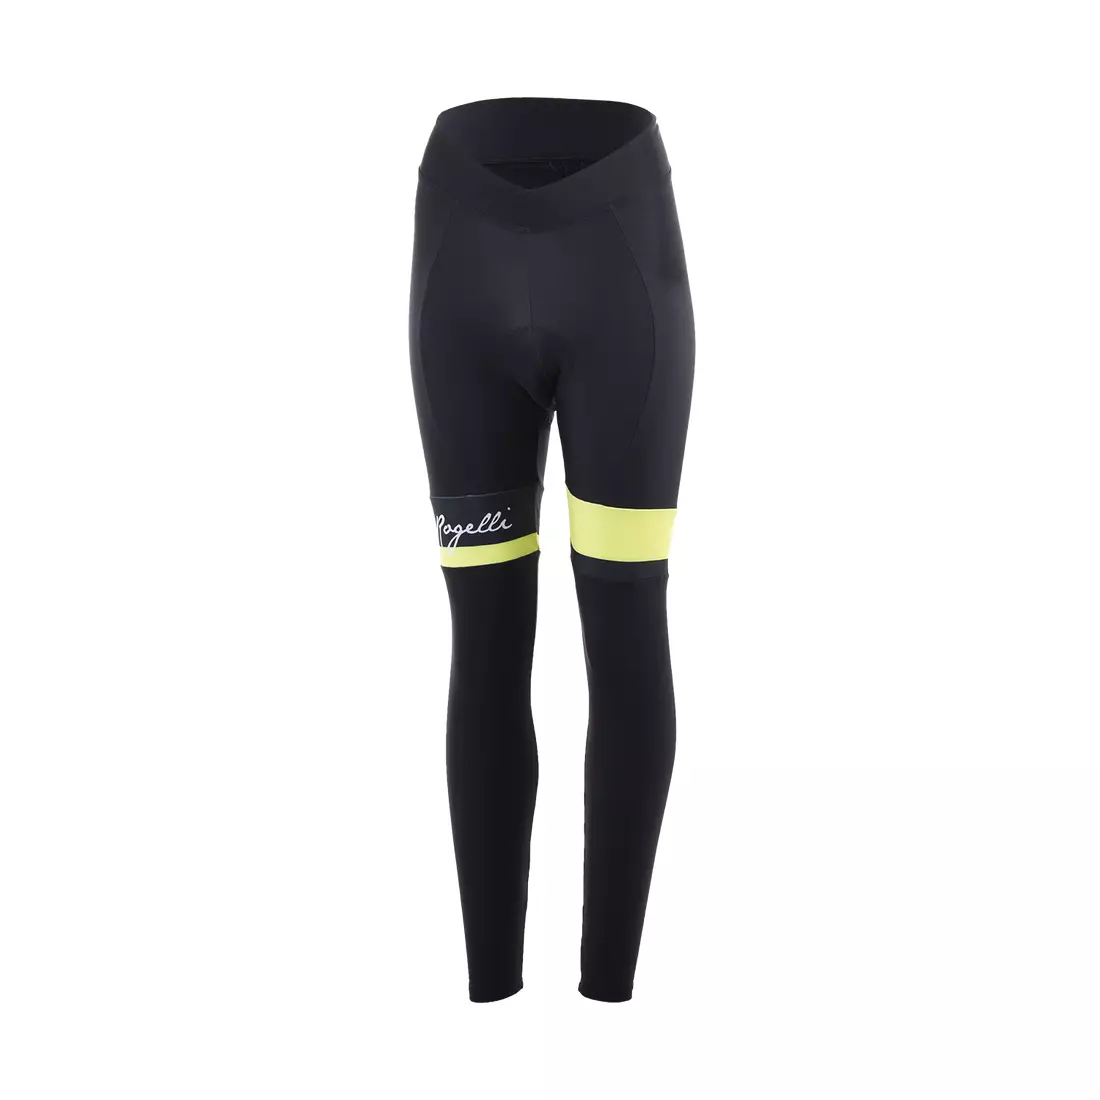 ROGELLI women's winter cycling pants SELECT black/yellow